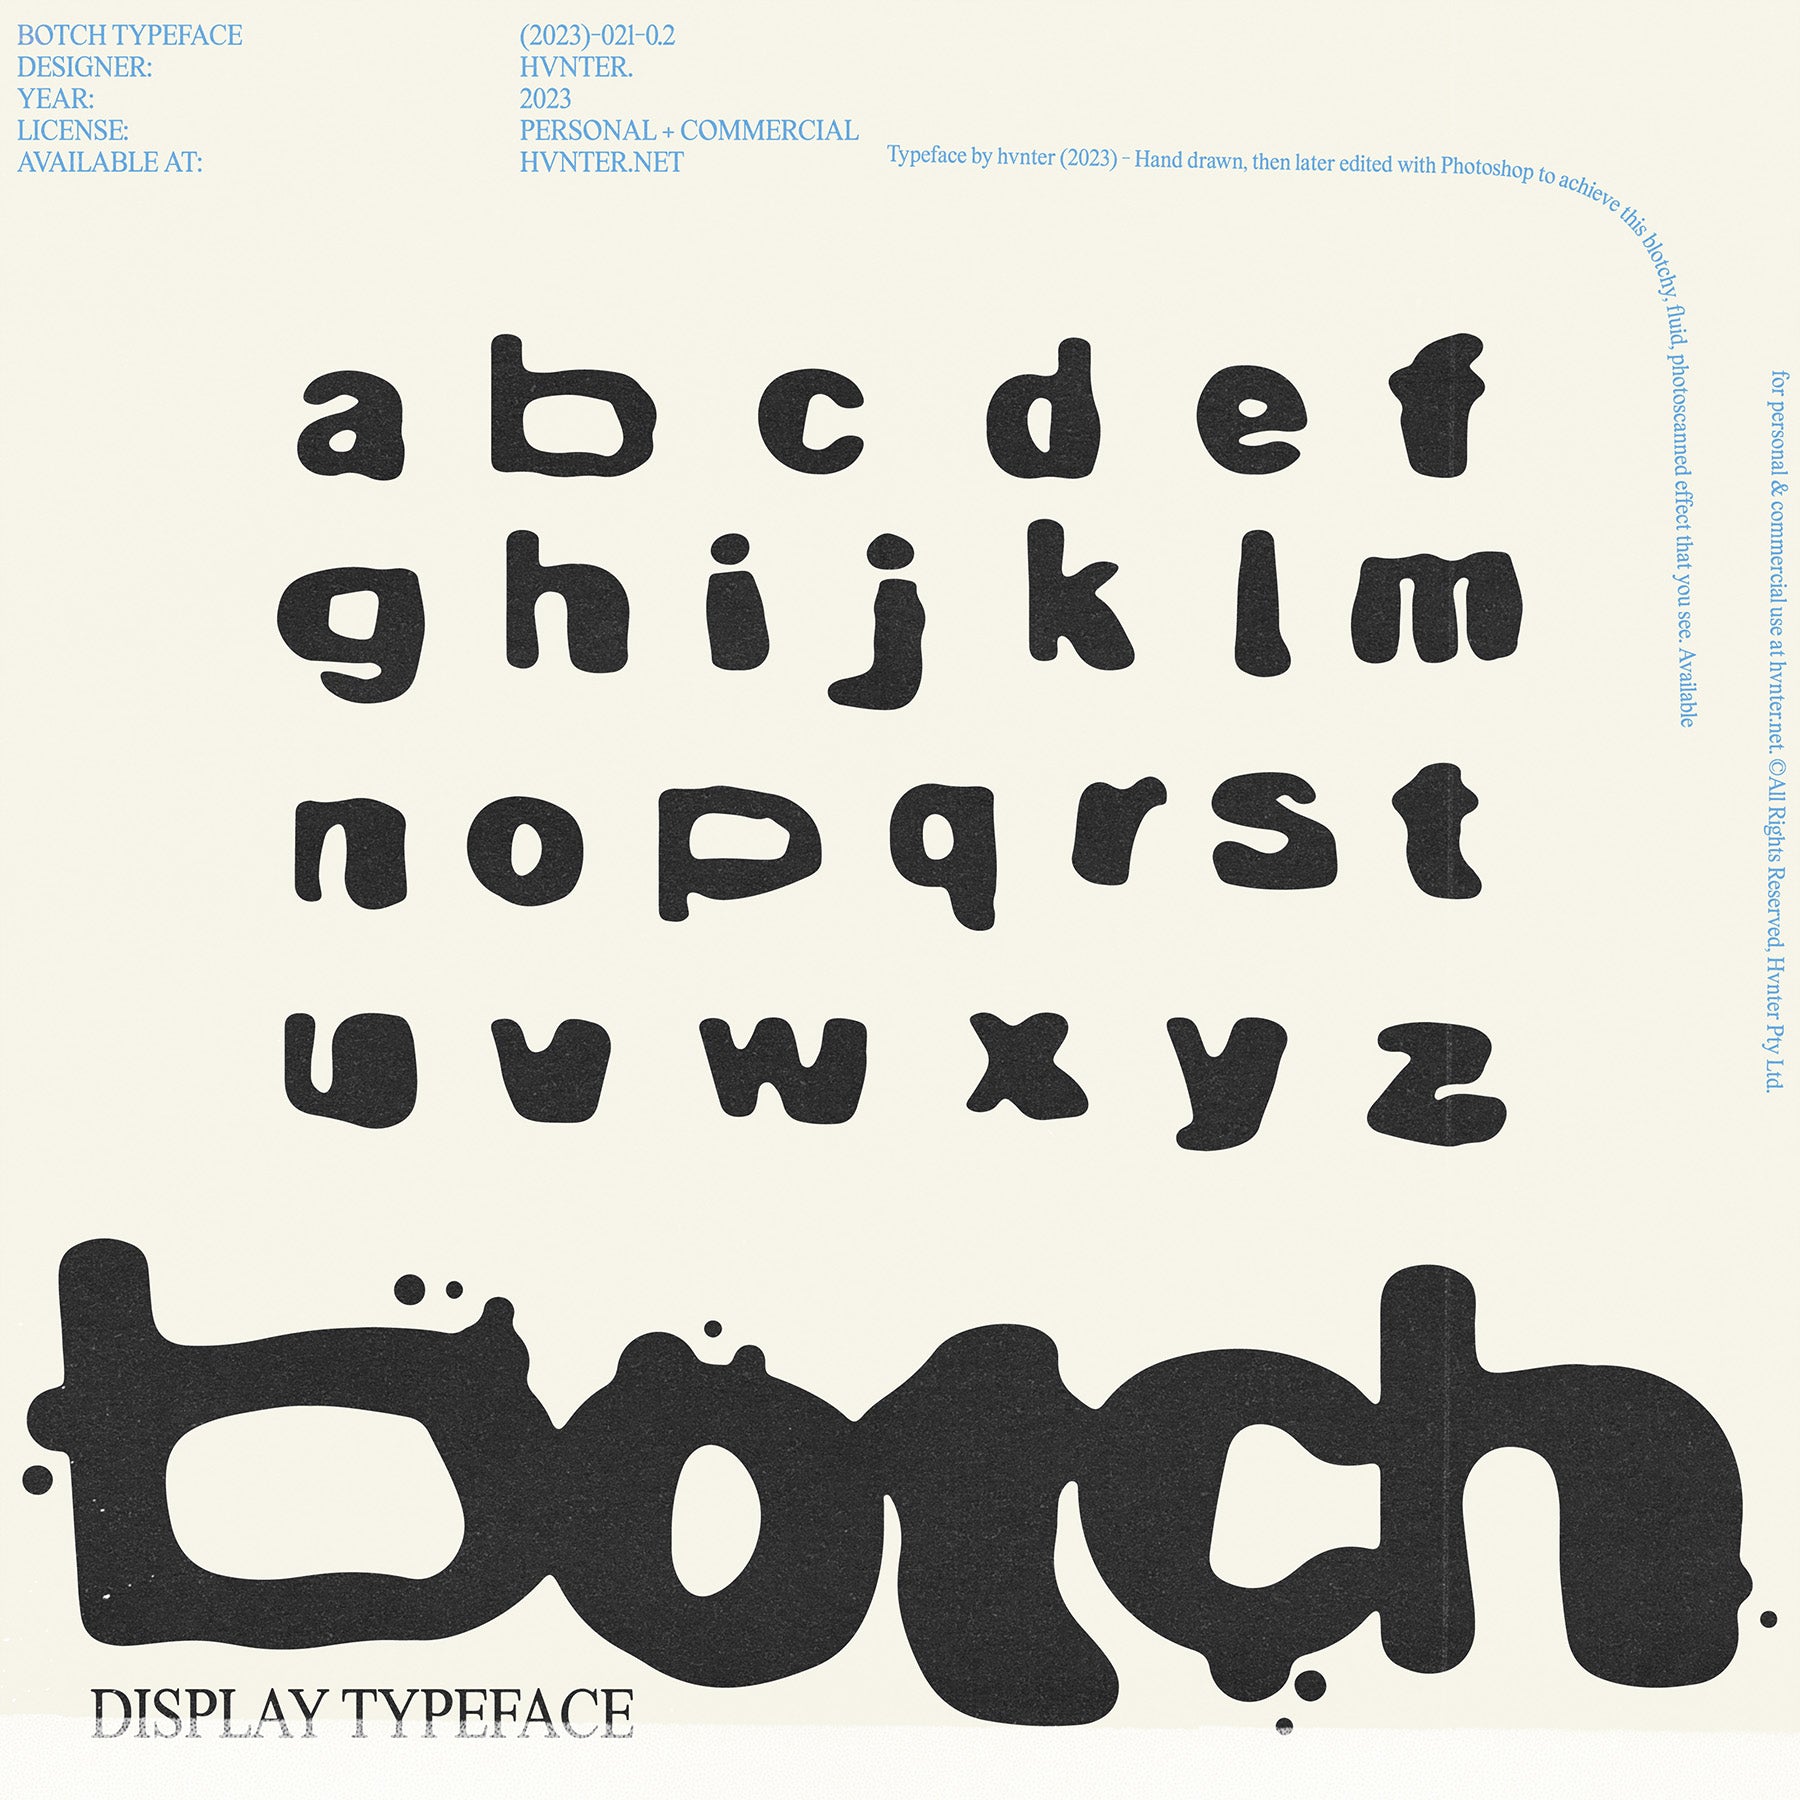 Botch Typeface